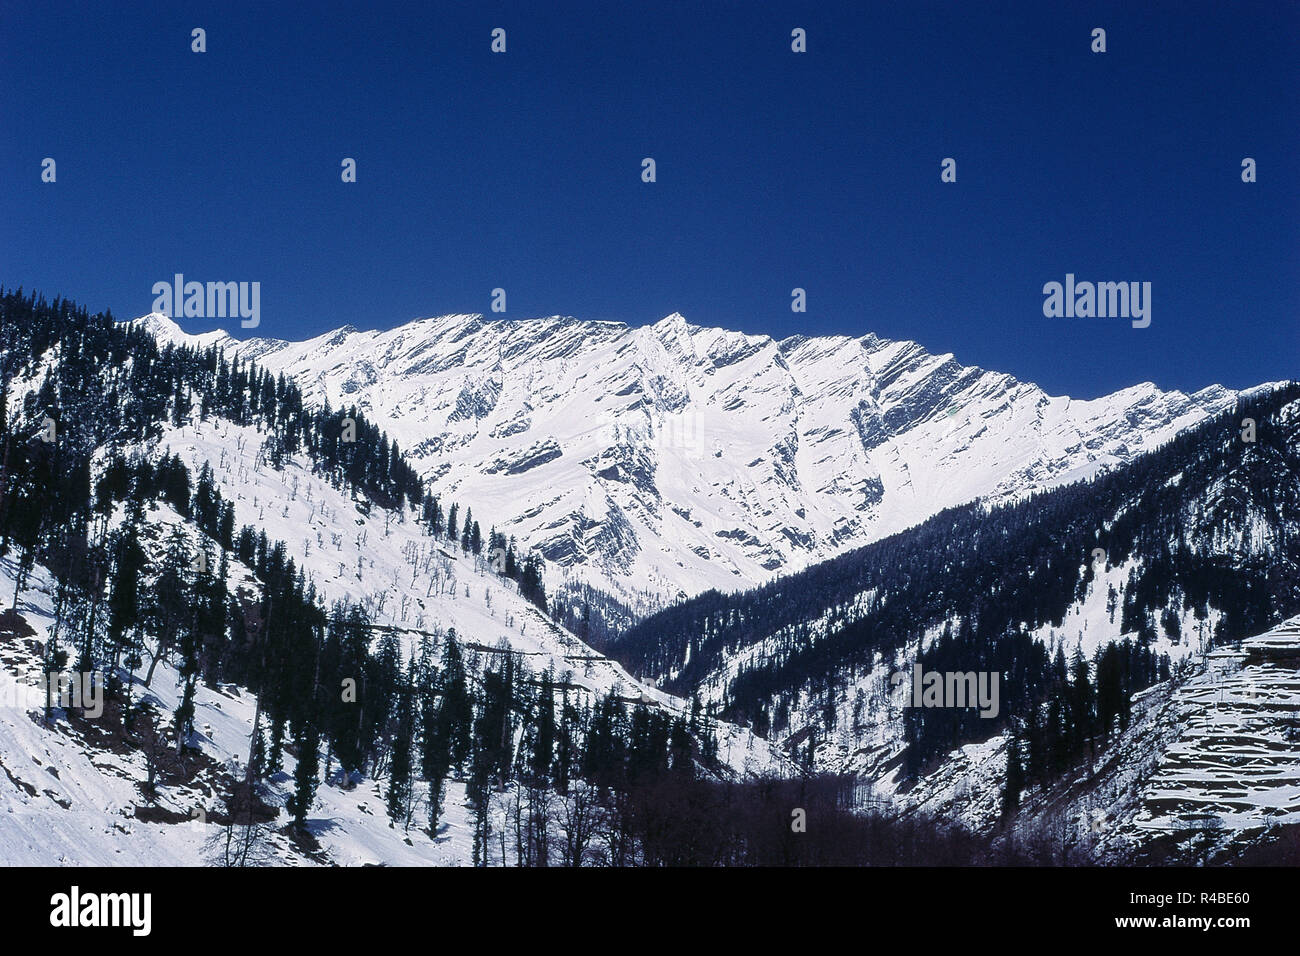 Snow clad mountain, Solang Valley, Manali, Himachal Pradesh, India, Asia Stock Photo